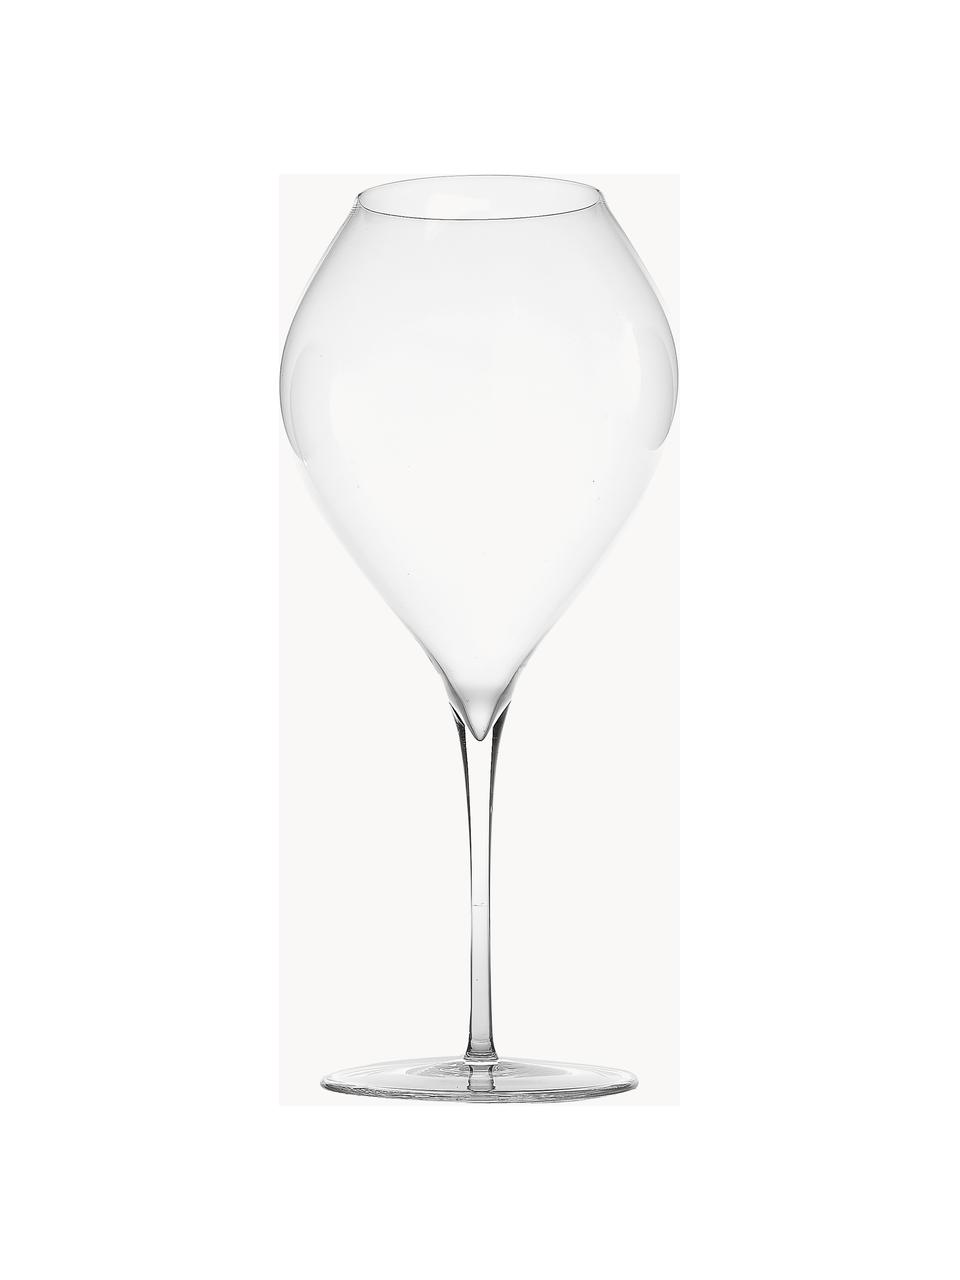 Kristallen wijnglazen Ultralight, 2 stuks, Kristalglas, Transparant, Ø 11 x H 25 cm, 820 ml